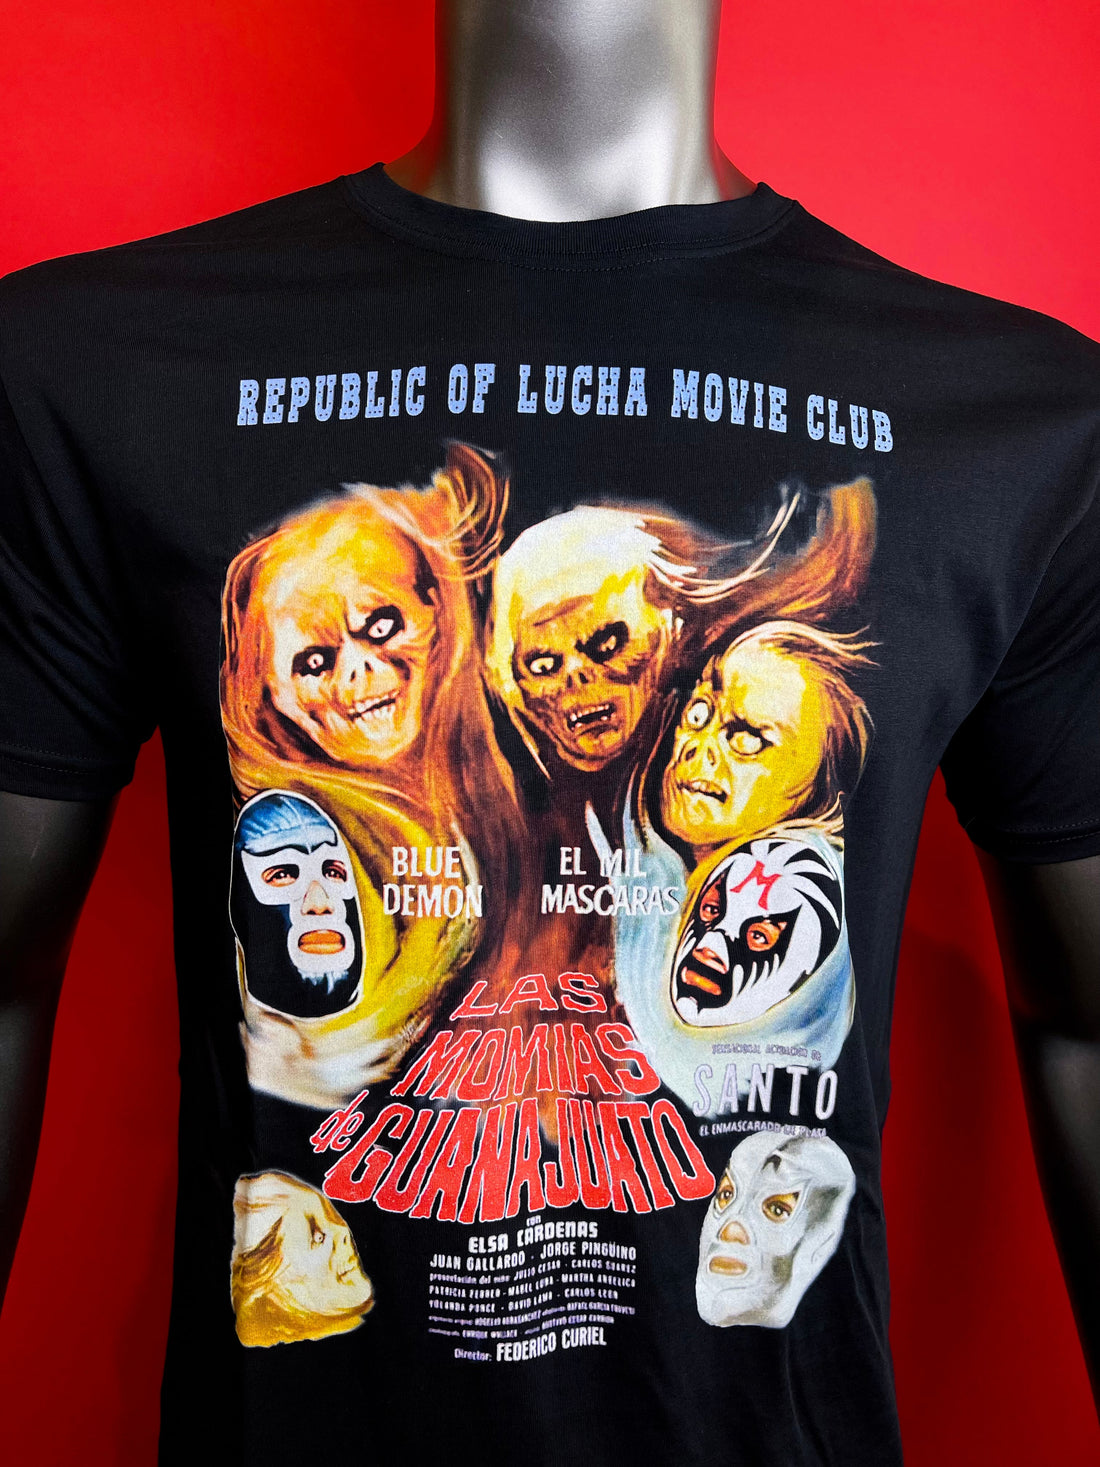 Lucha Movie Club: "LAS MOMIAS DE GUANAJUATO" t-shirt